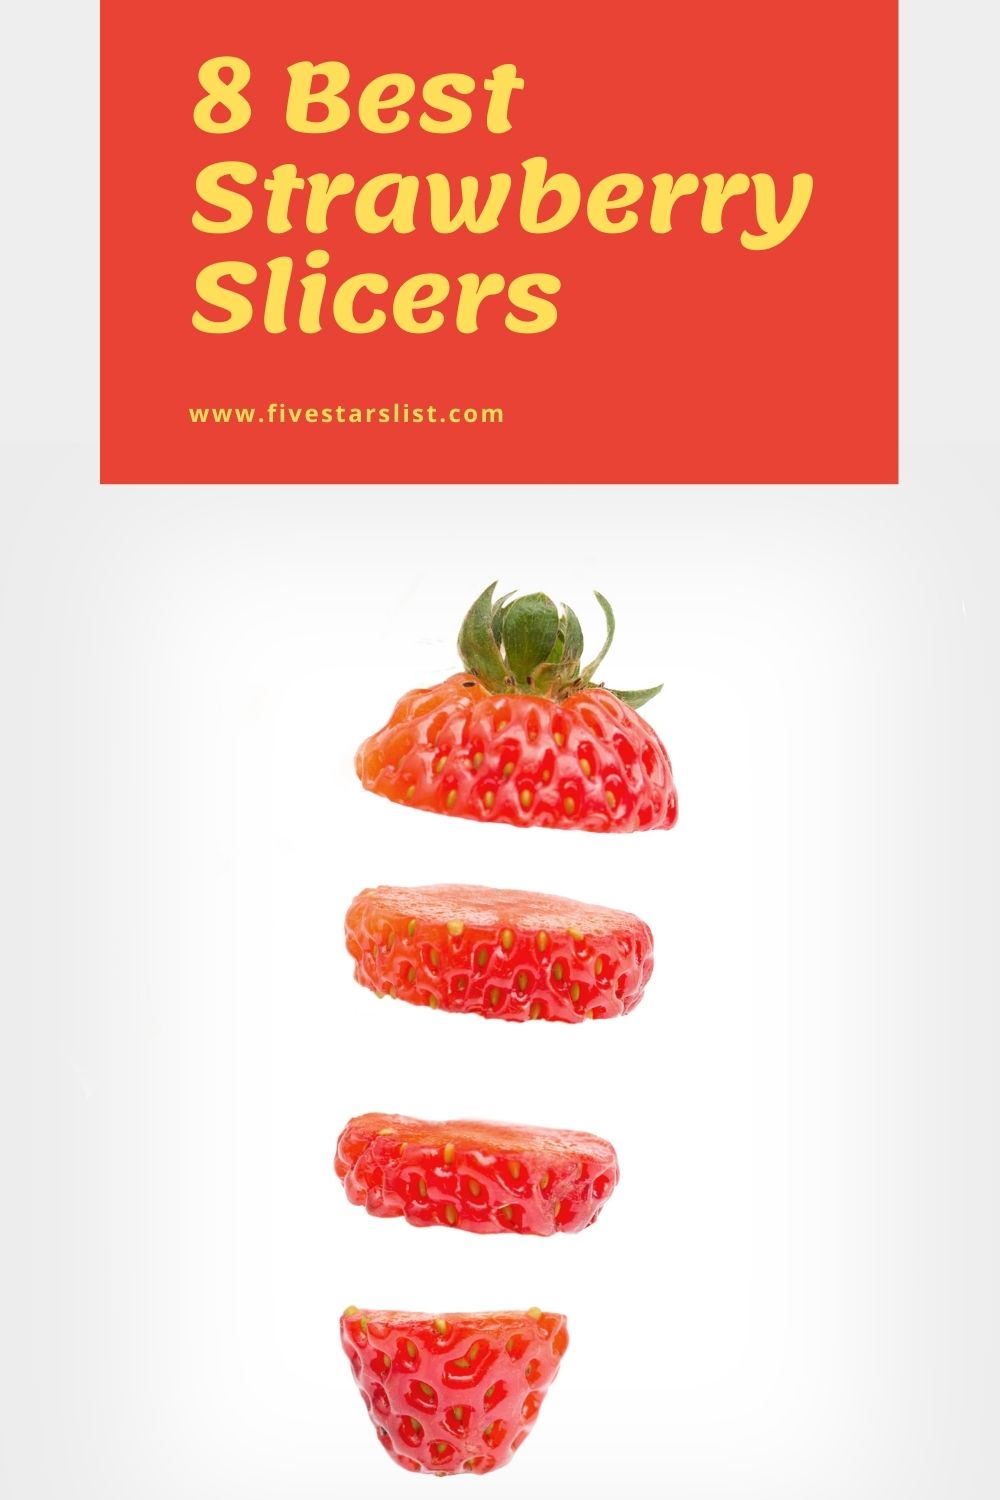 8 Best Strawberry Slicers